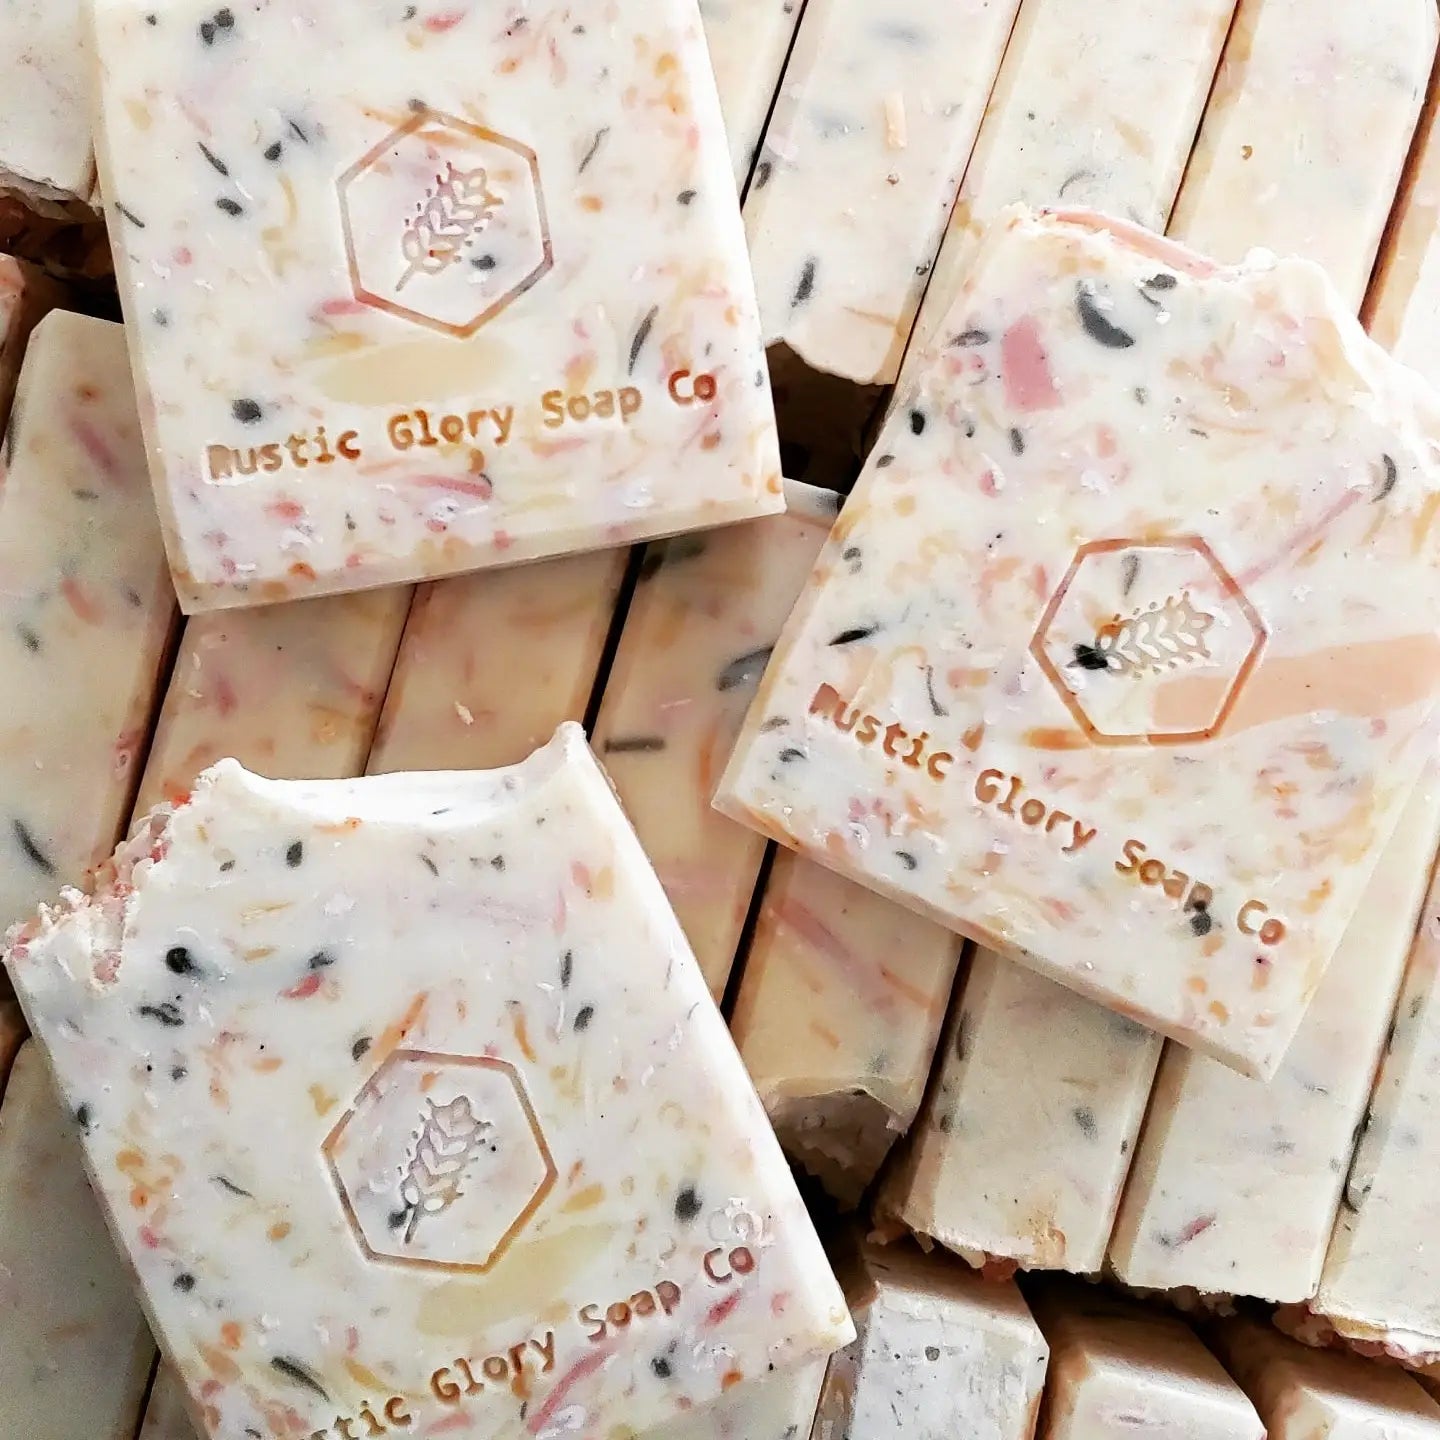 Rustic Glory Soap Company Confetti (Lavender Eucalyptus) Soap - Boxed Bliss Creations